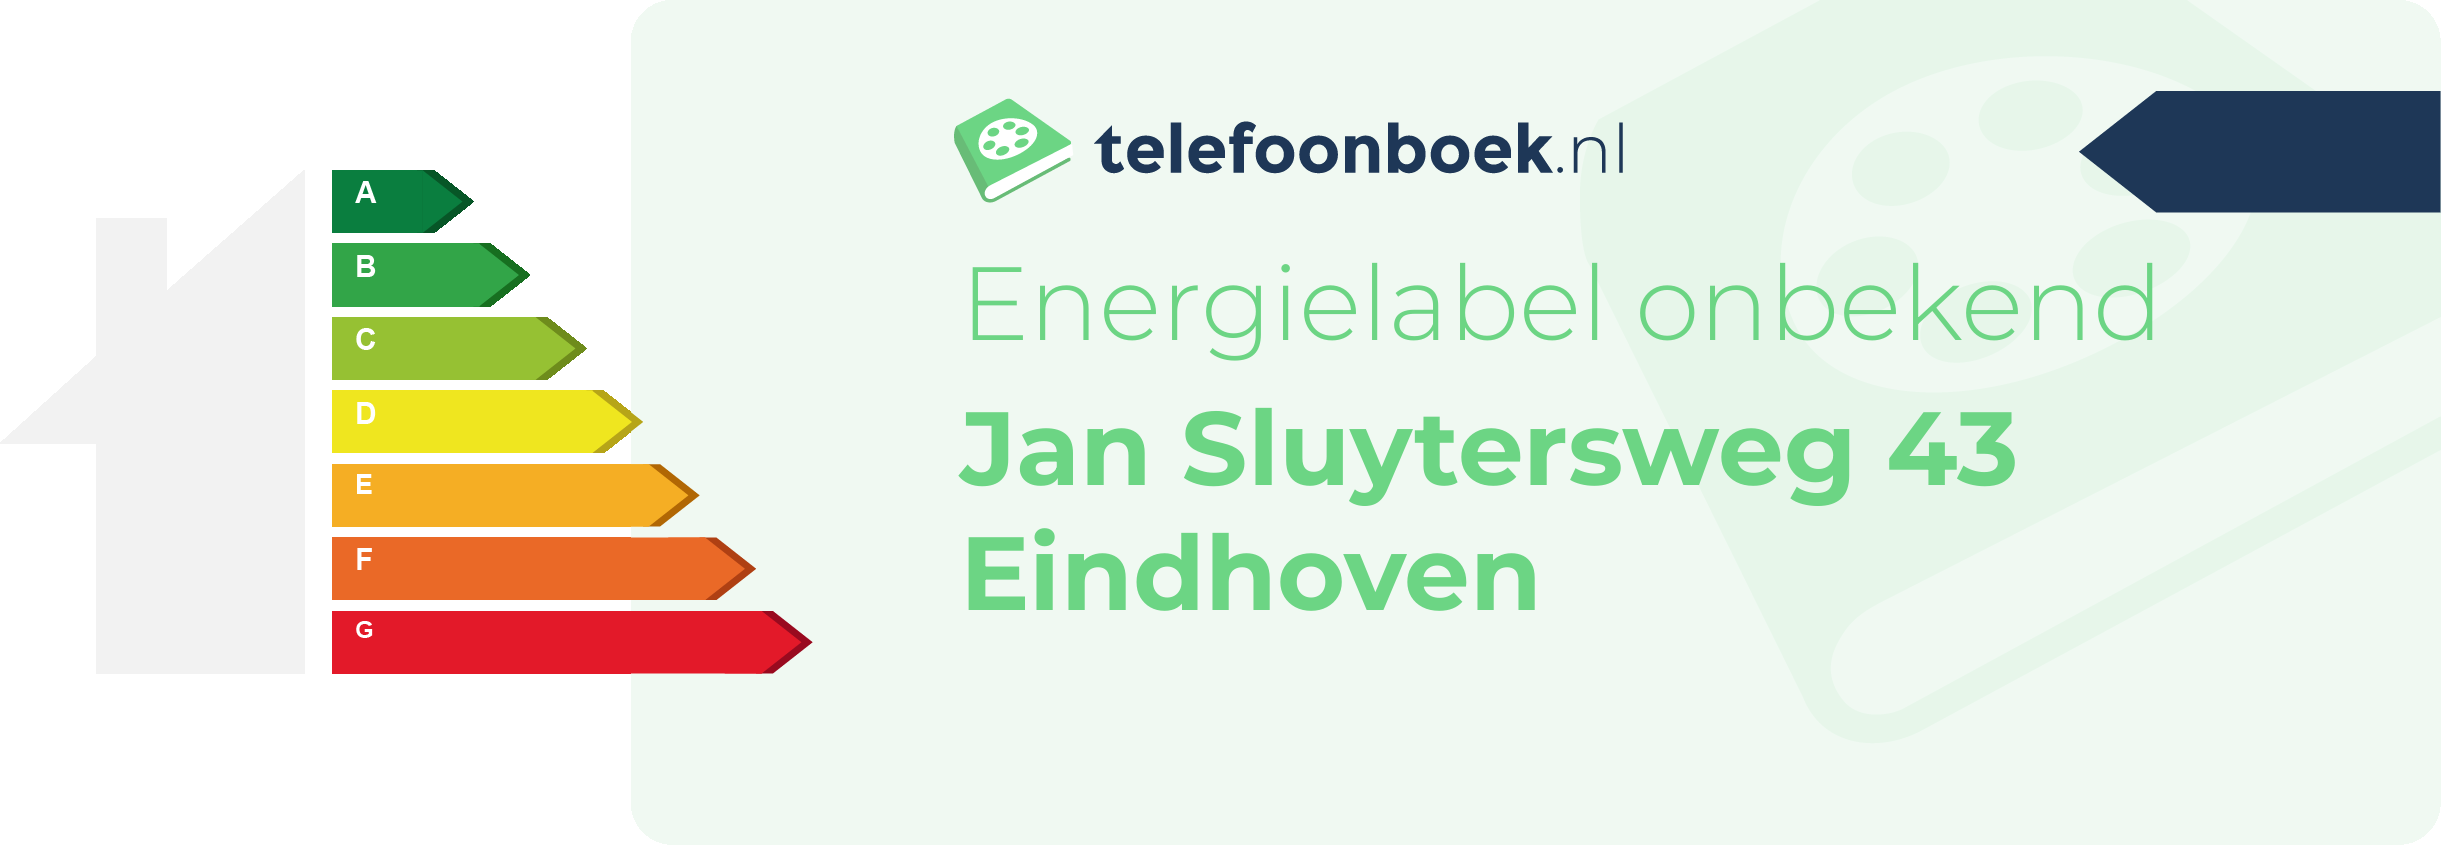 Energielabel Jan Sluytersweg 43 Eindhoven